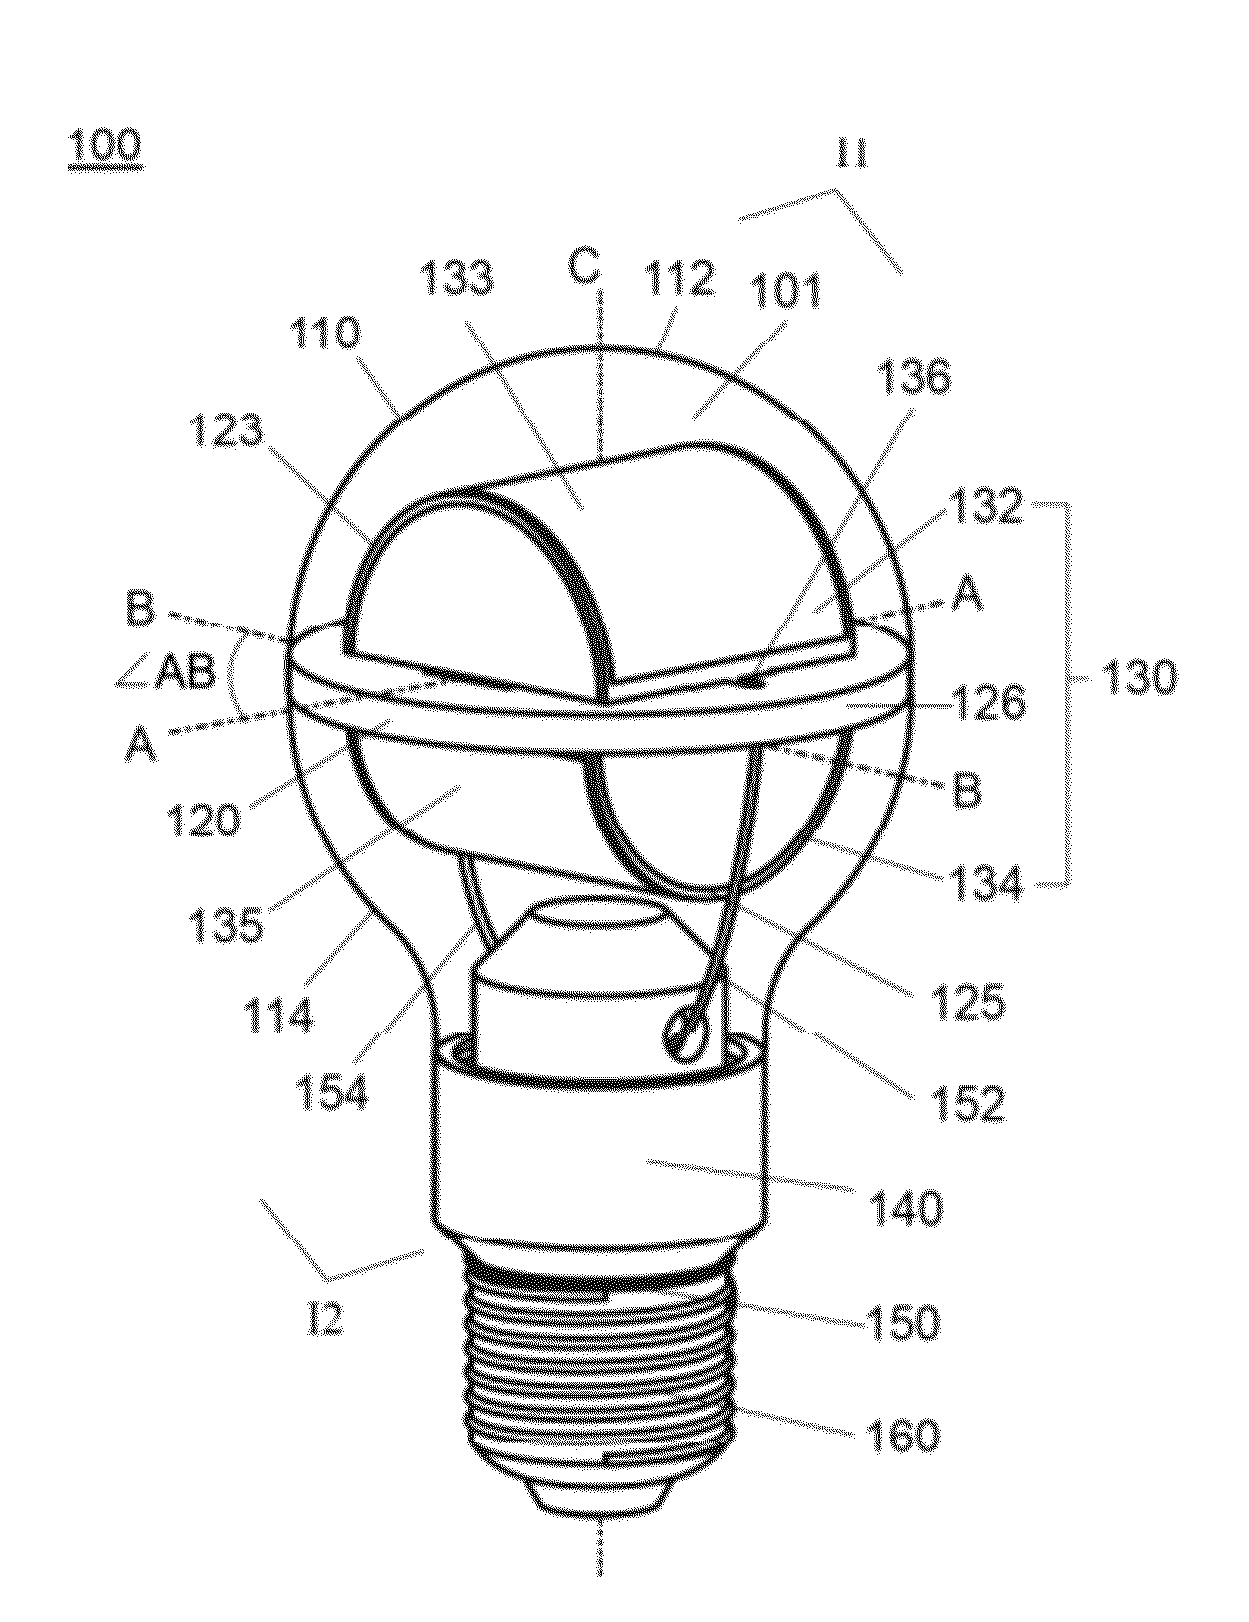 LED light bulb having an LED light engine with illuminated curved surfaces